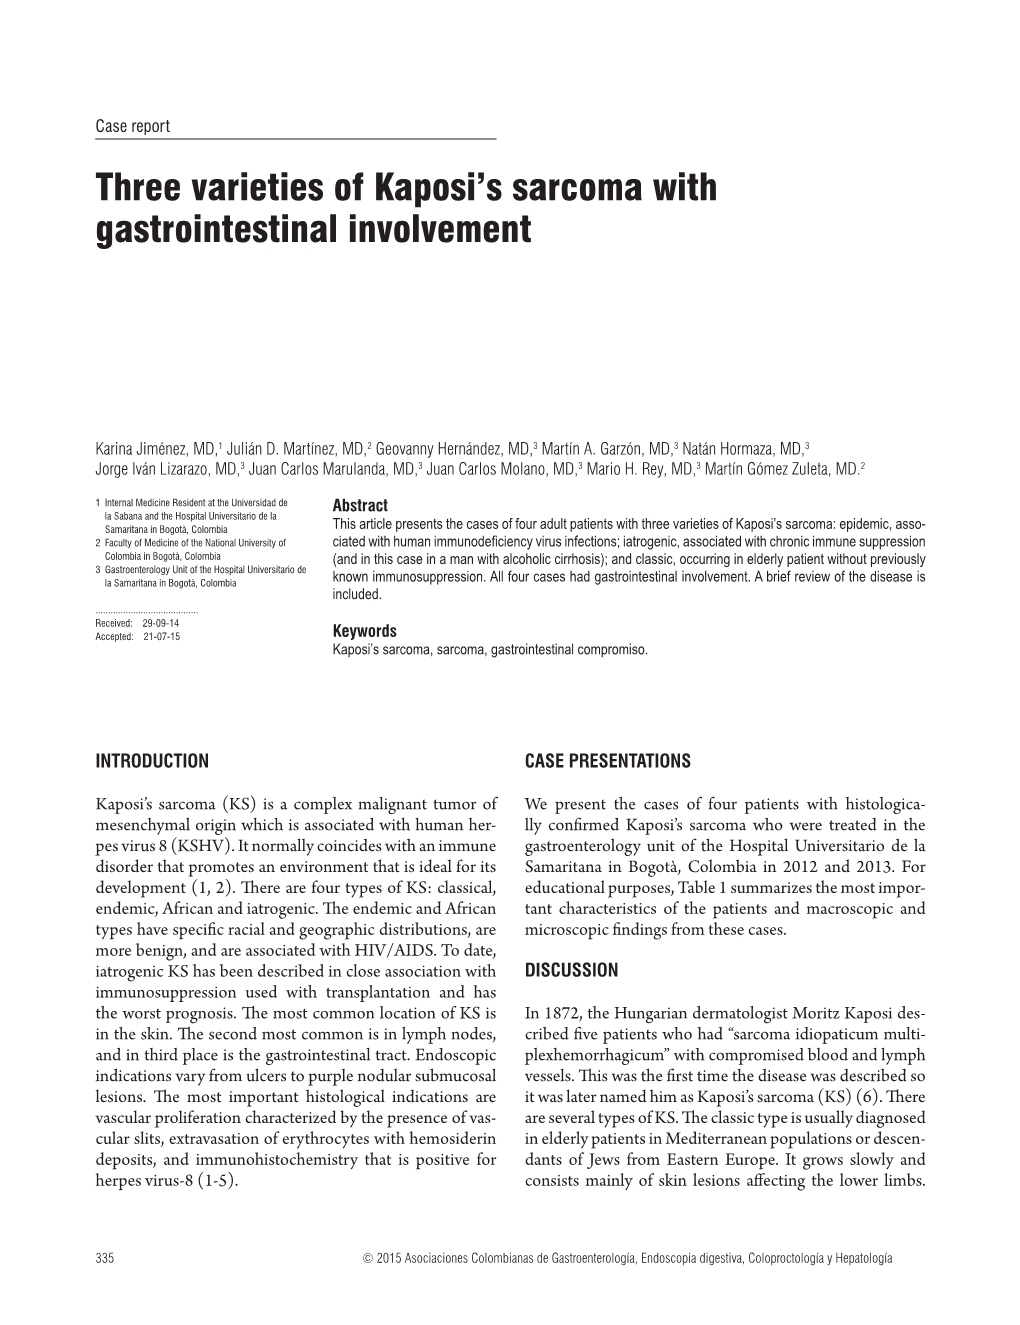 Three Varieties of Kaposi's Sarcoma with Gastrointestinal Involvement